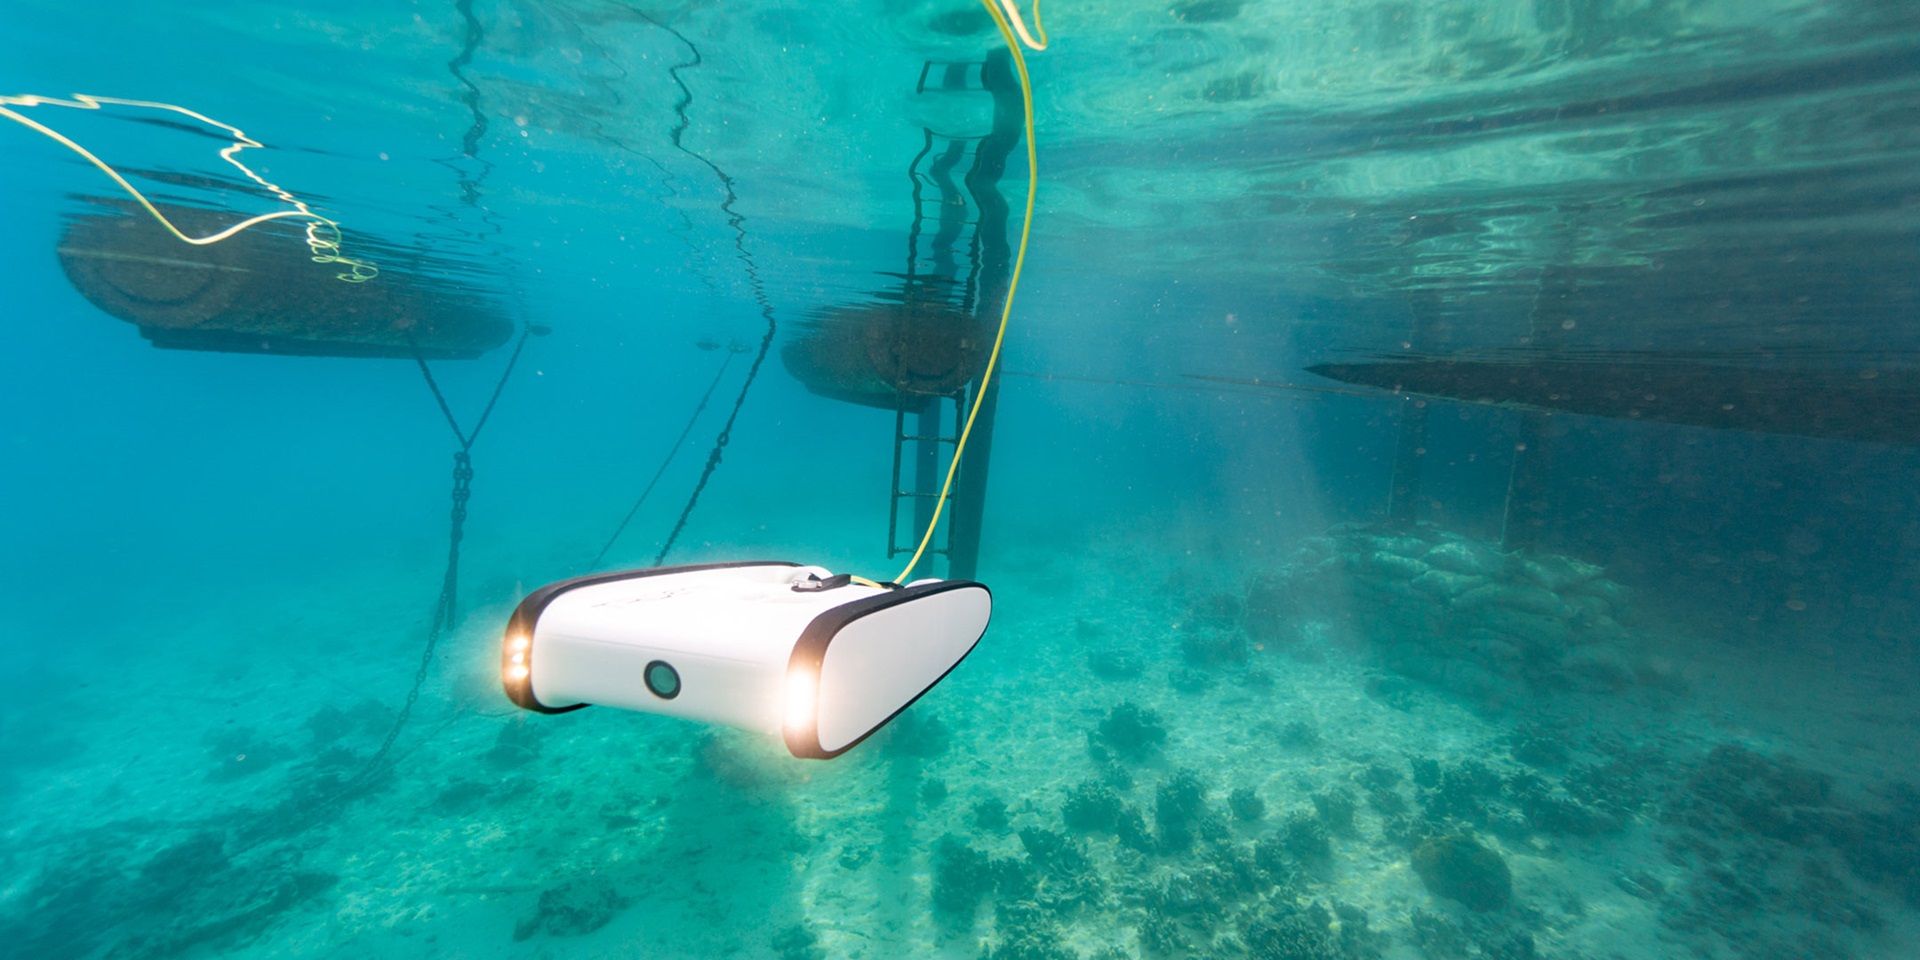 Underwater drone in action